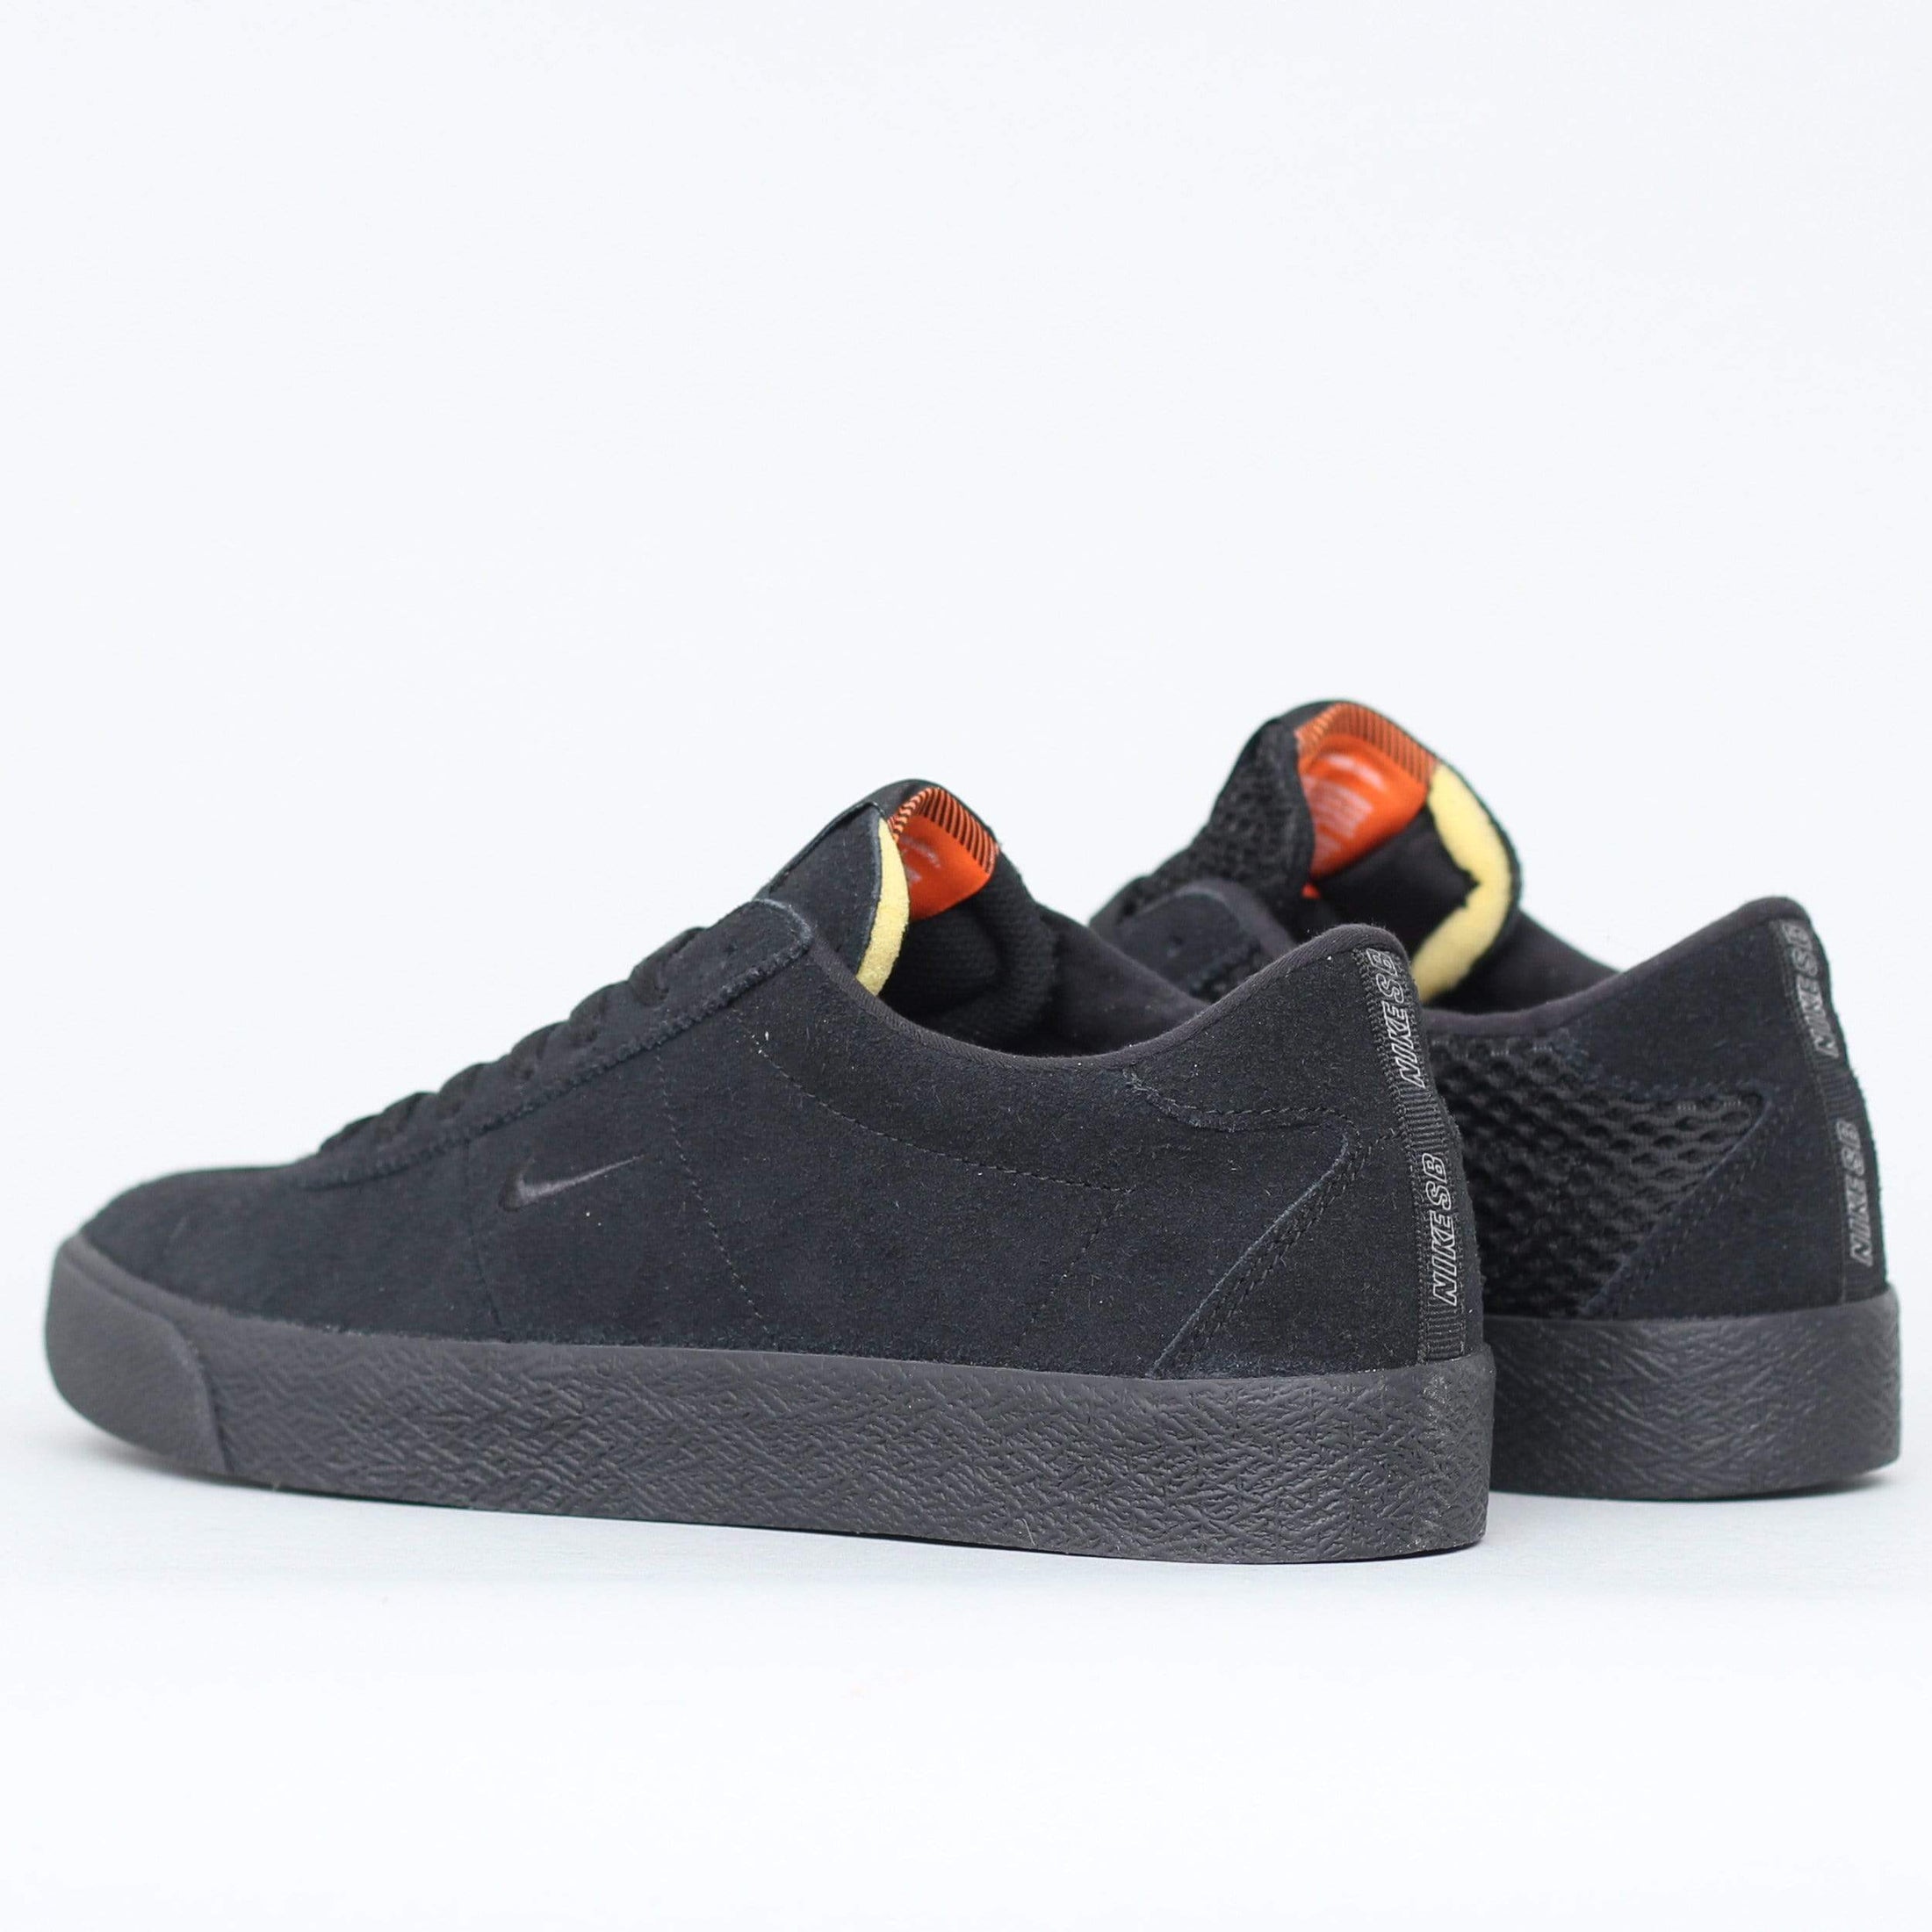 Nike SB Ishod Bruin ISO Orange Label Shoes Black / Black